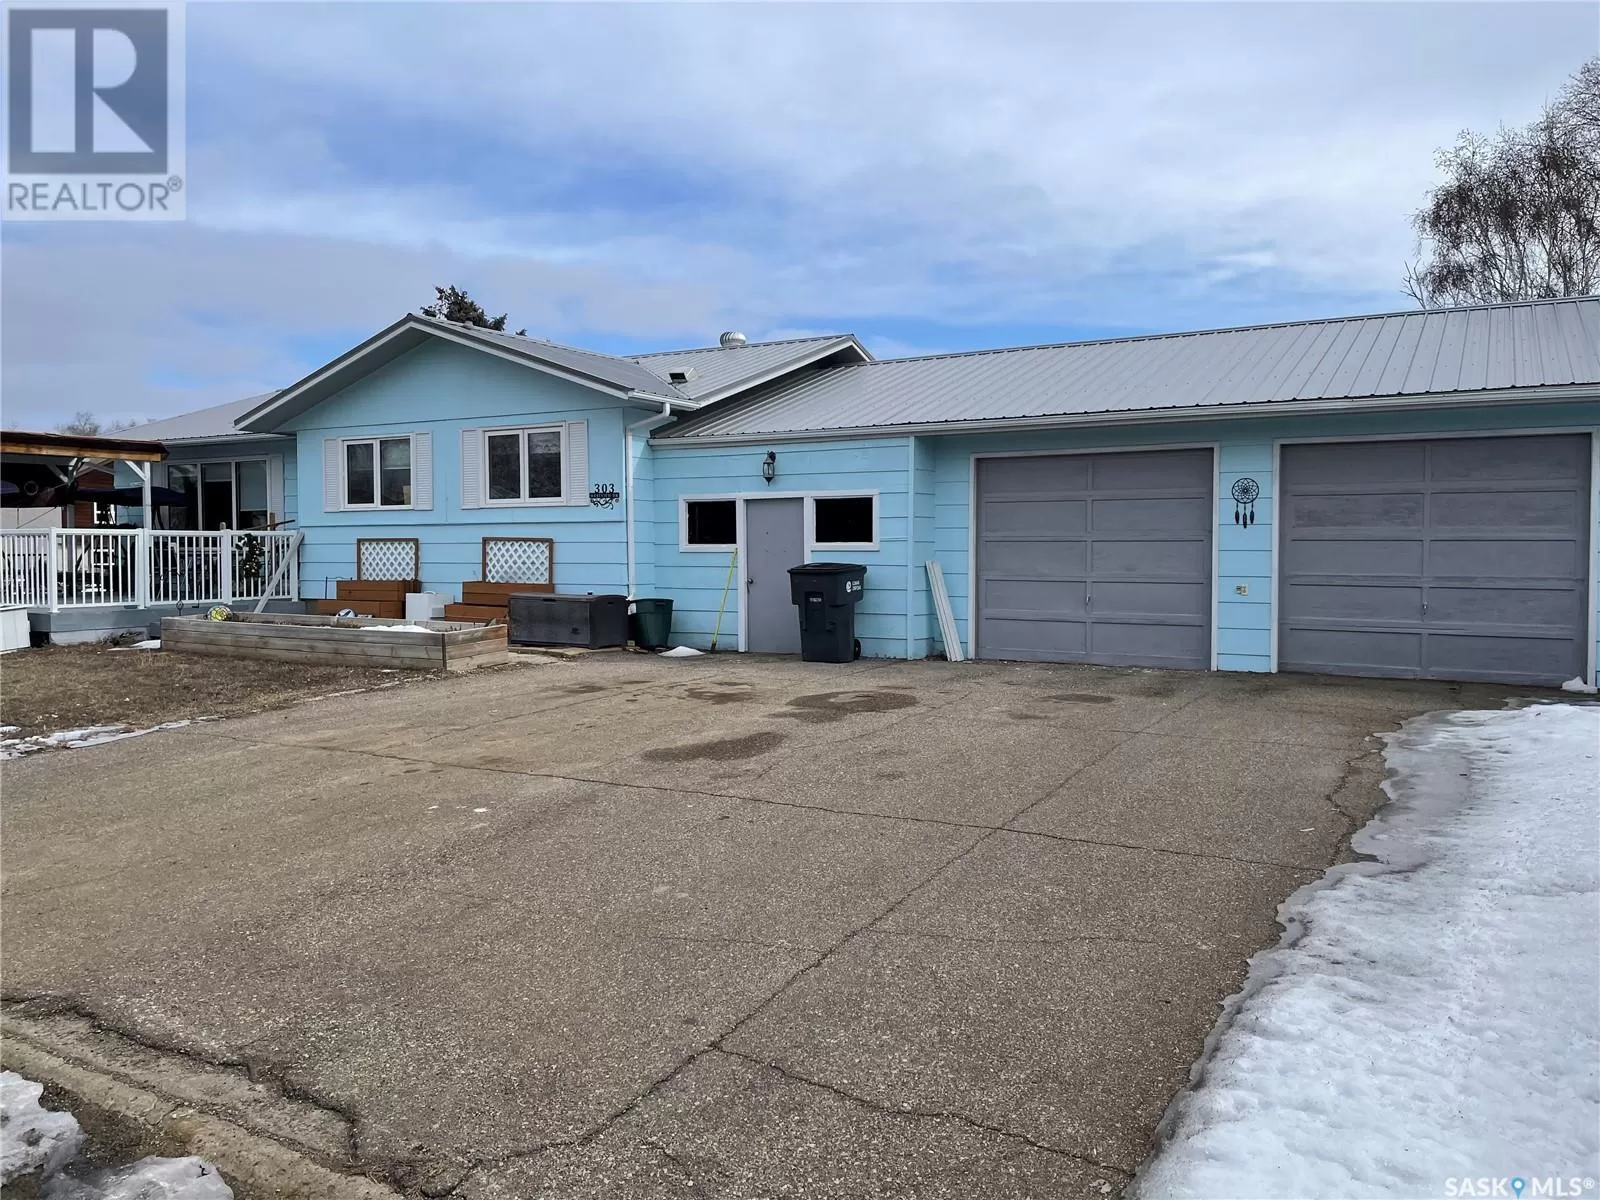 House for rent: 303 Westview Drive, Coronach, Saskatchewan S0H 0Z0